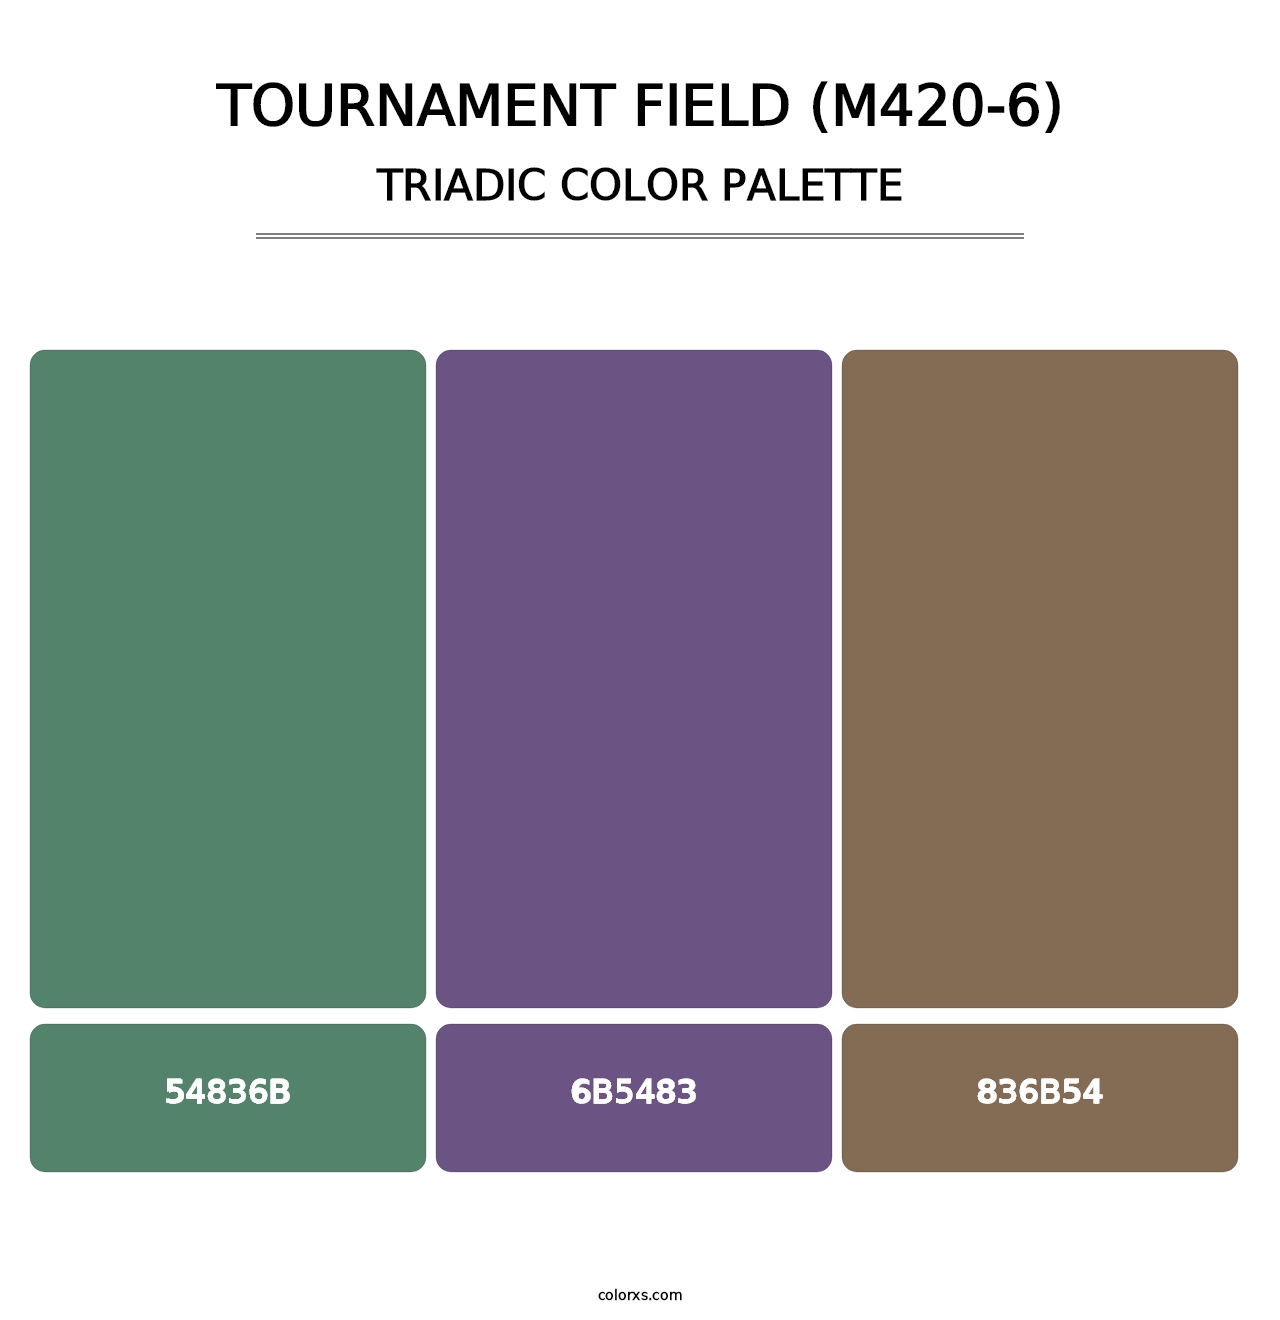 Tournament Field (M420-6) - Triadic Color Palette